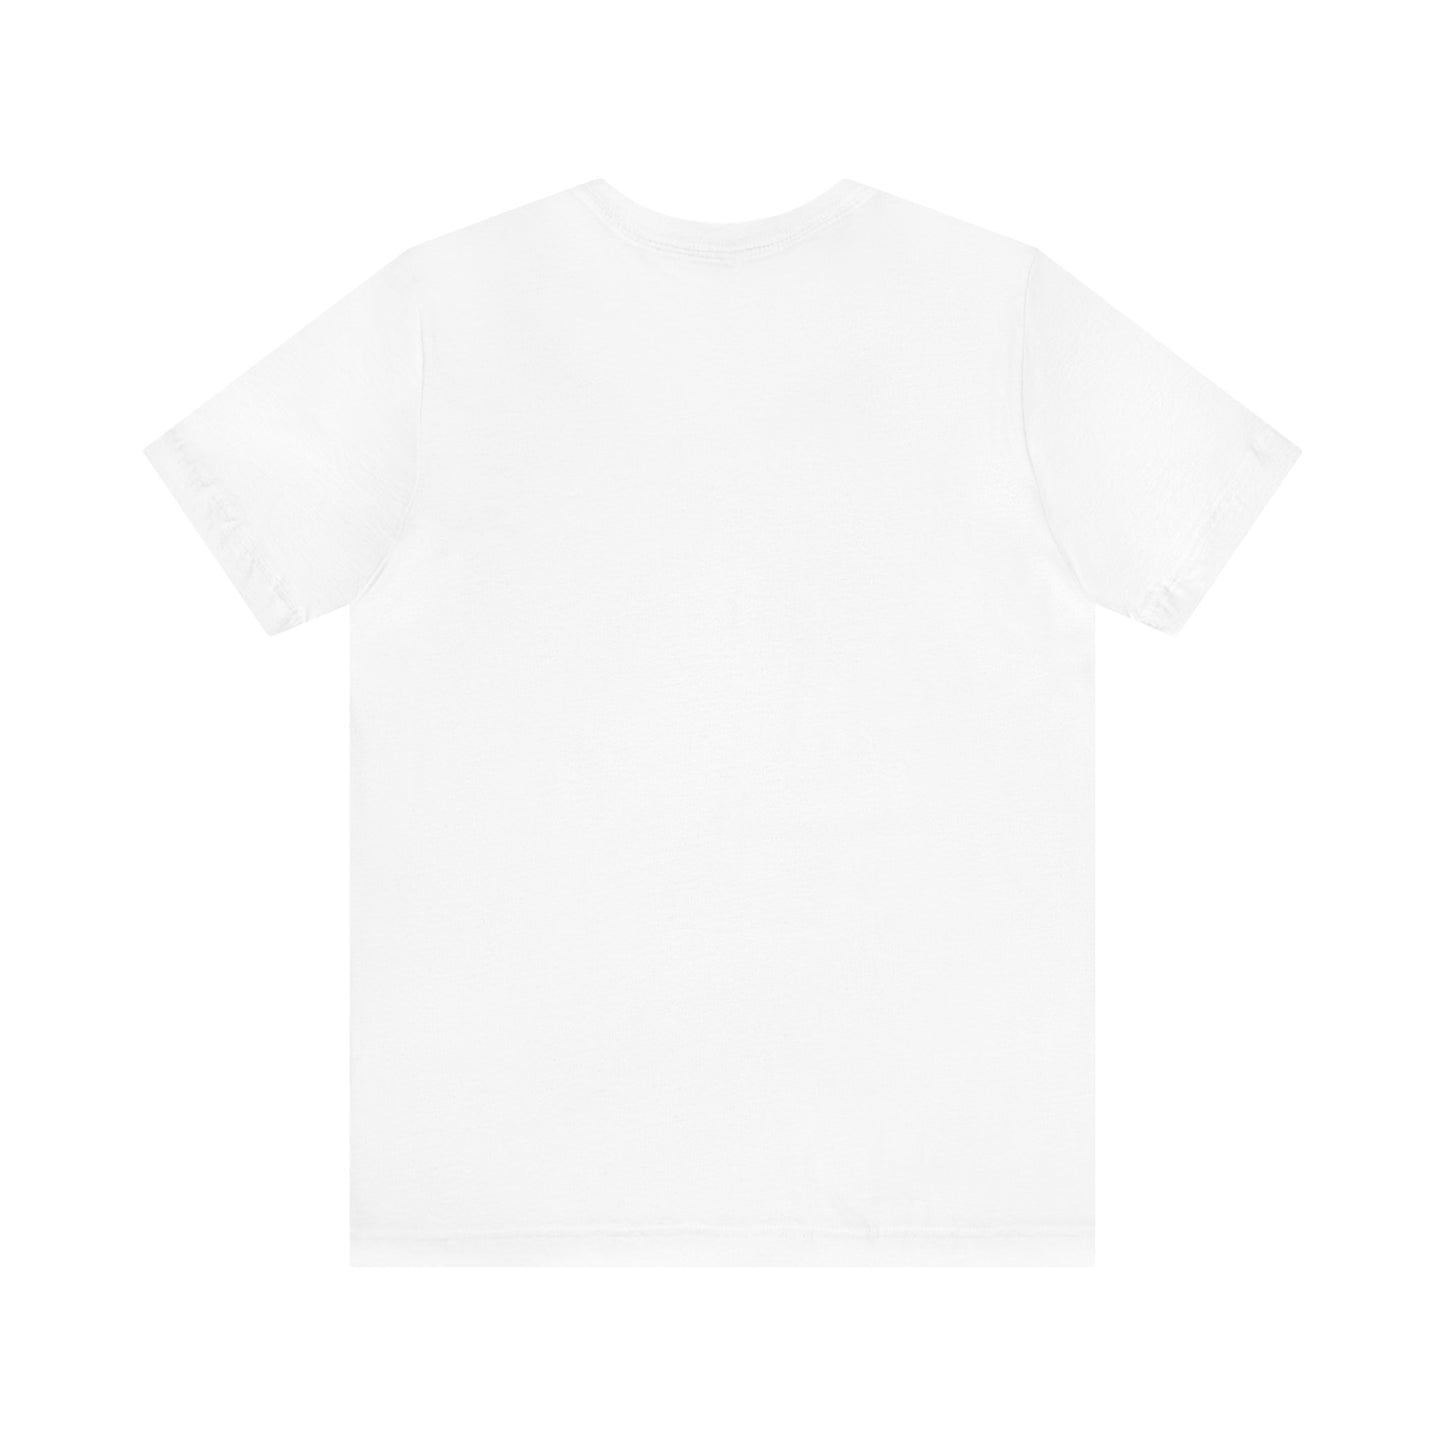 Dual Analog Black Logo T-Shirt - Classic White